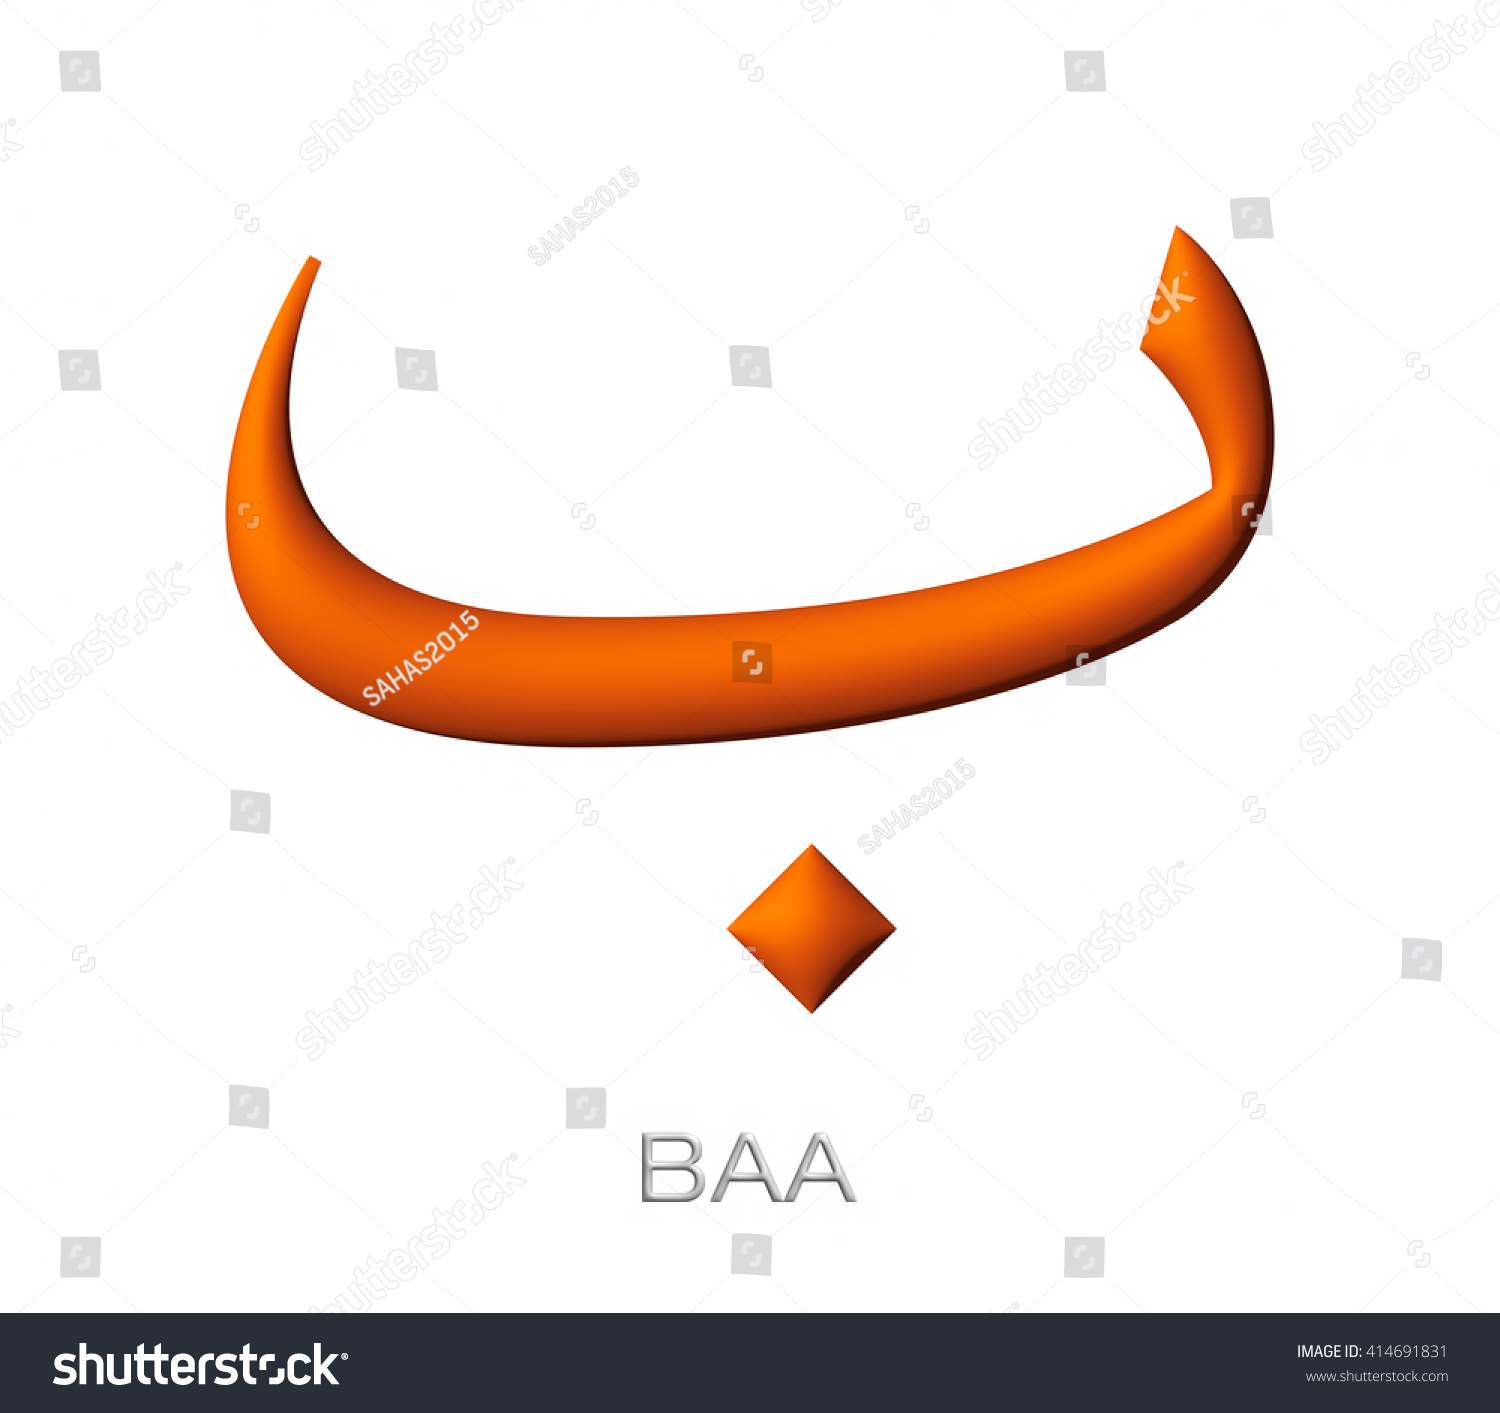 3d Arabic Alphabet Letter Baa In Orange Brown On Isolated White